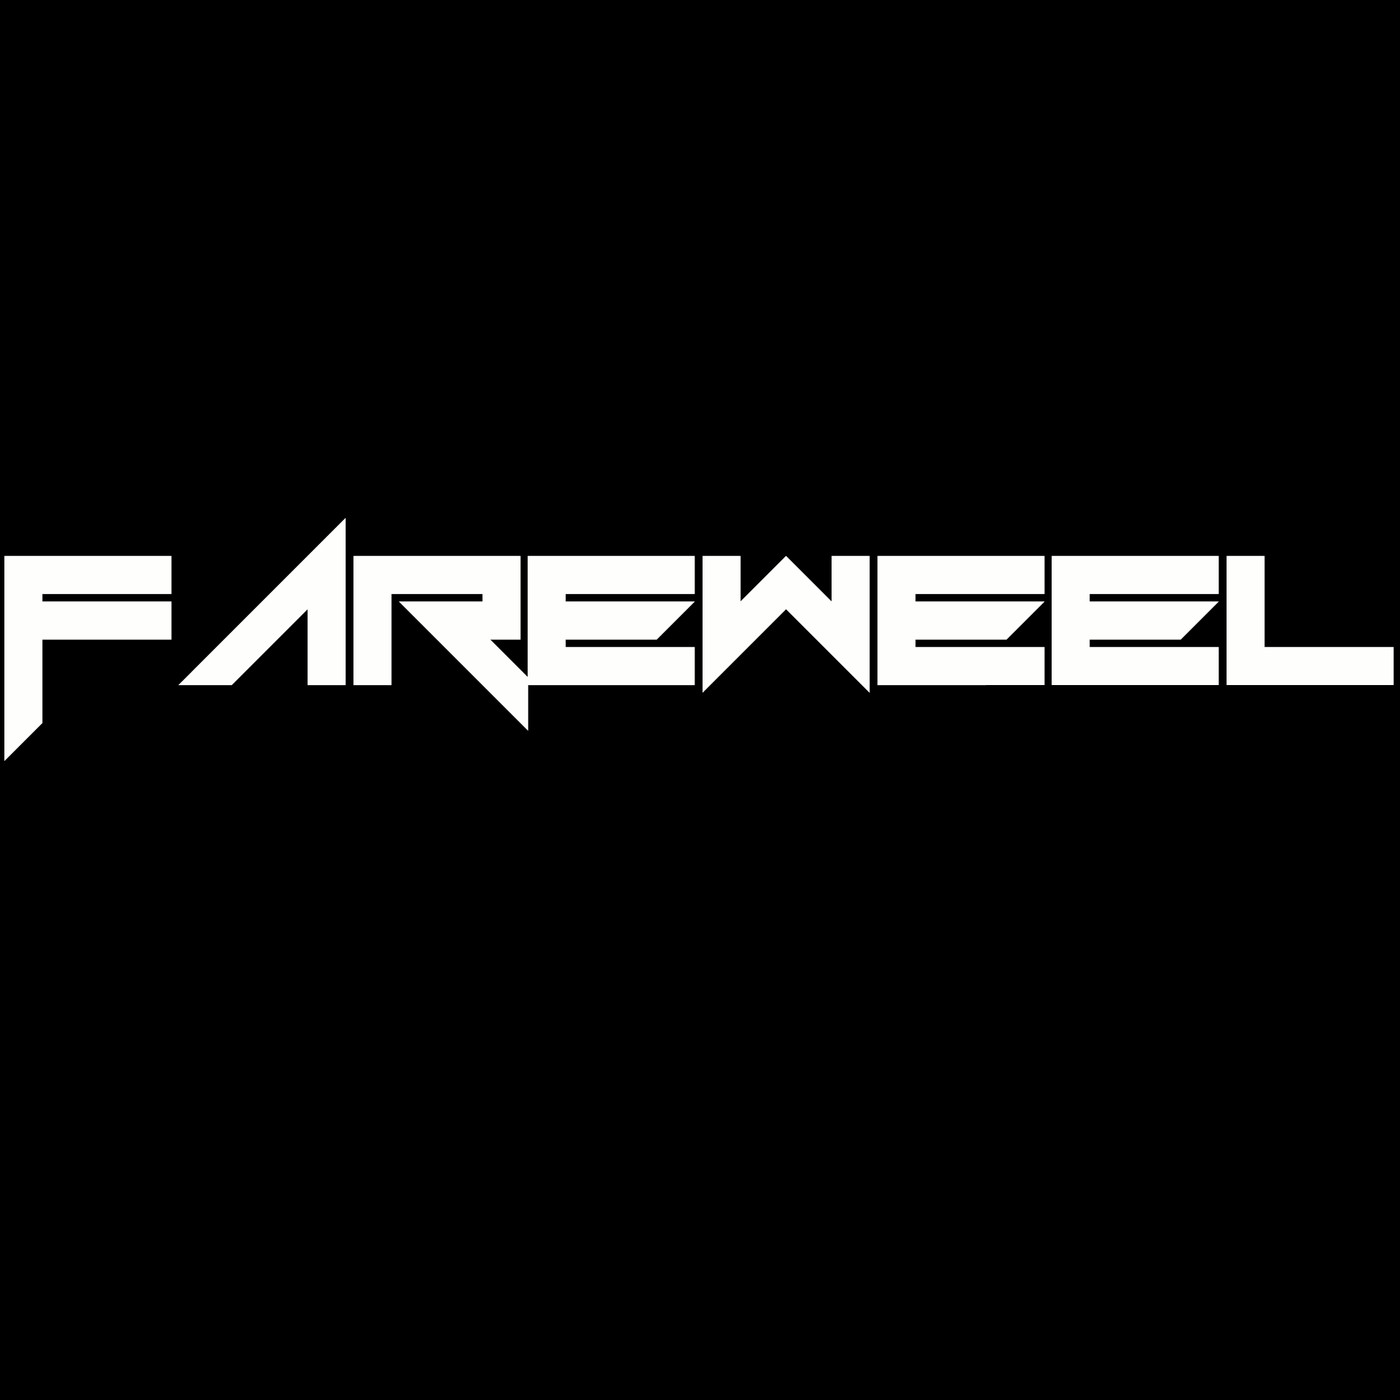 THE FAREWEEL SHOW 